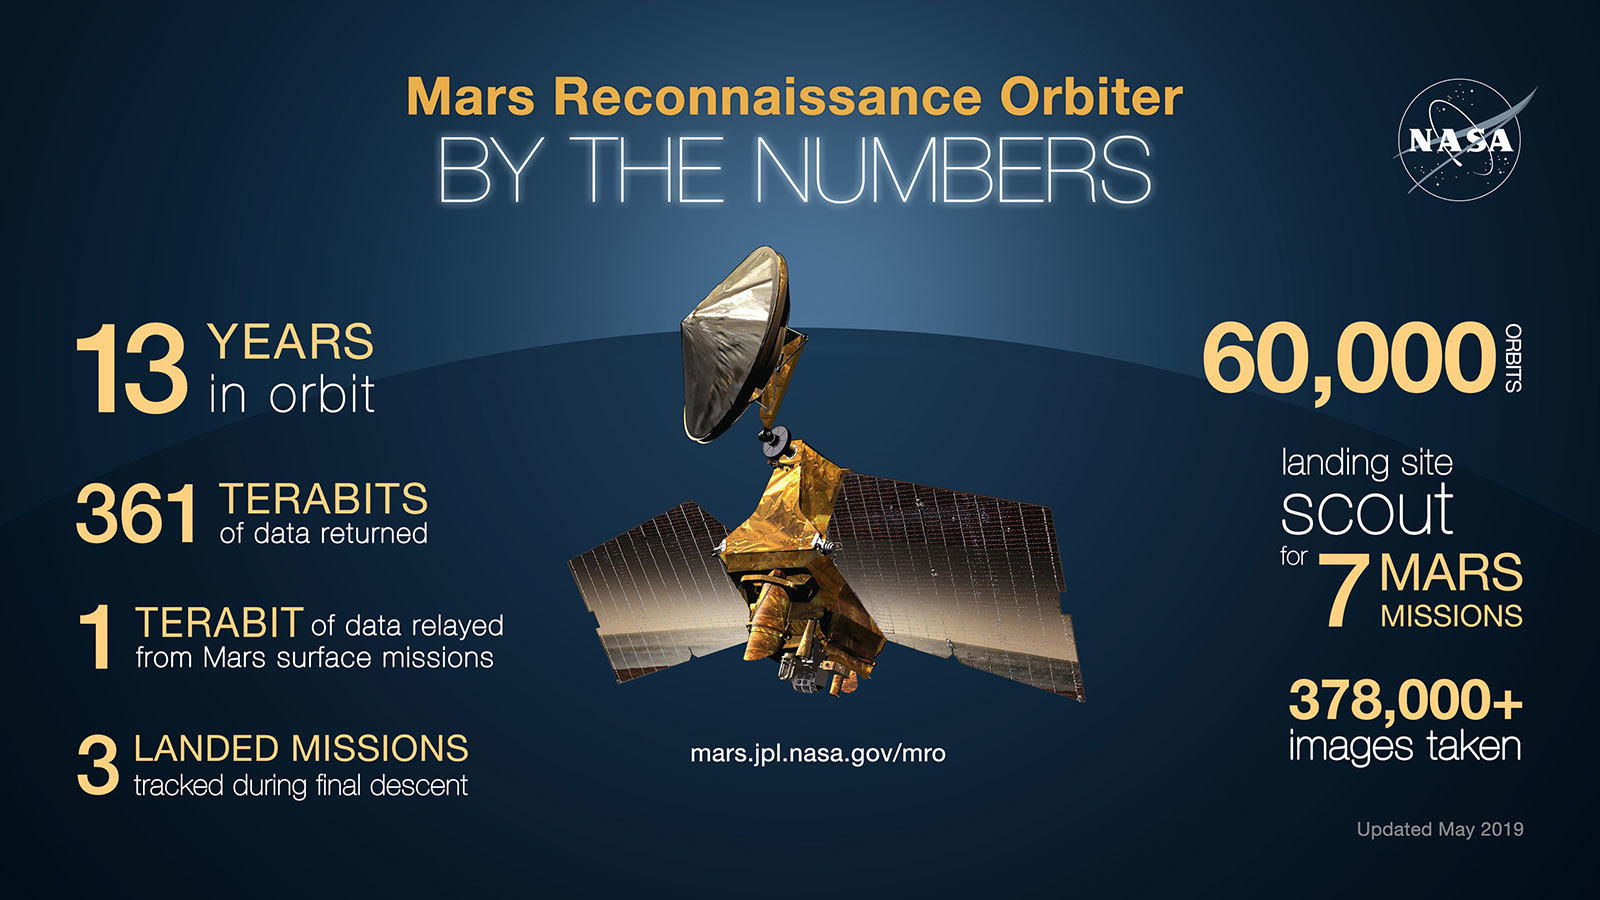 Mars Reconnaissance Orbiter – High Speed Communications Link